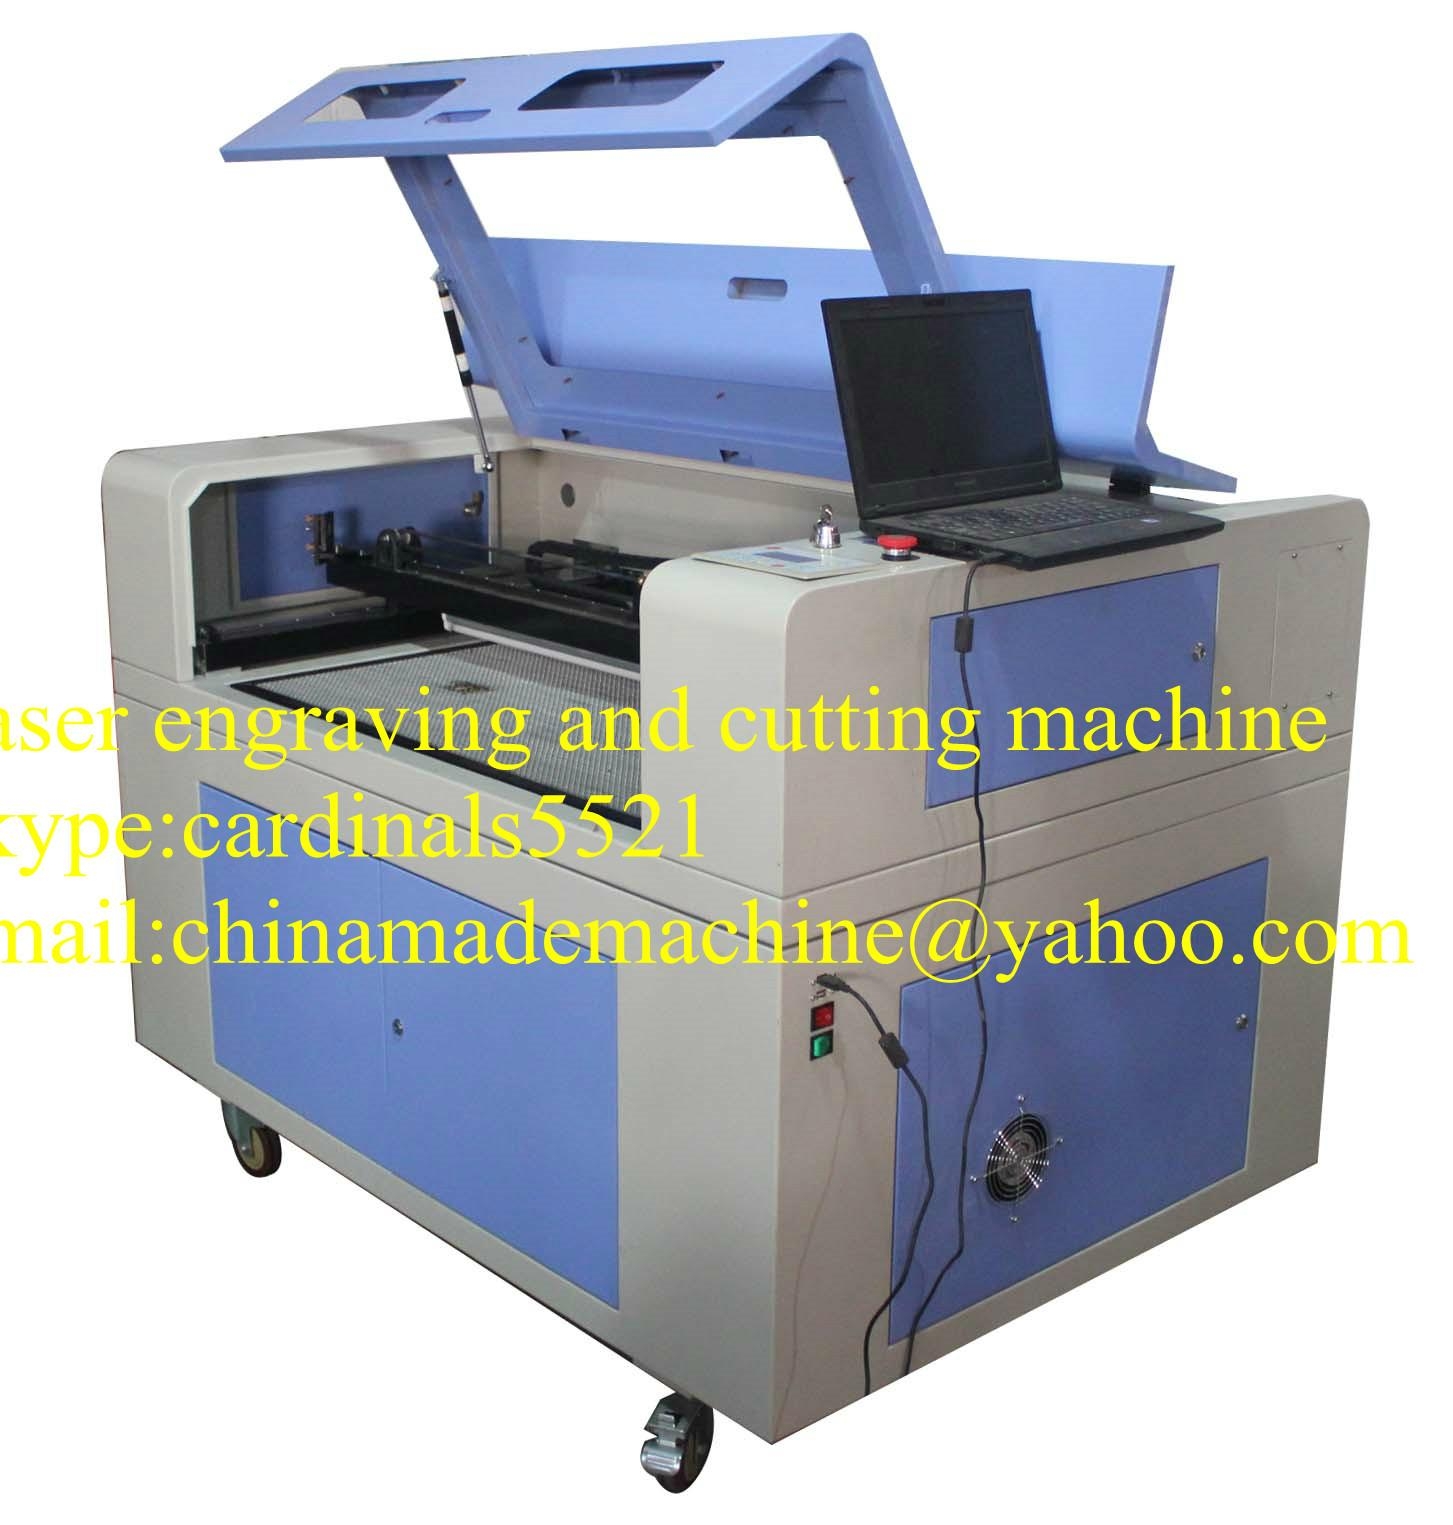 laser engraving machine ZK 1290 with RECI brand